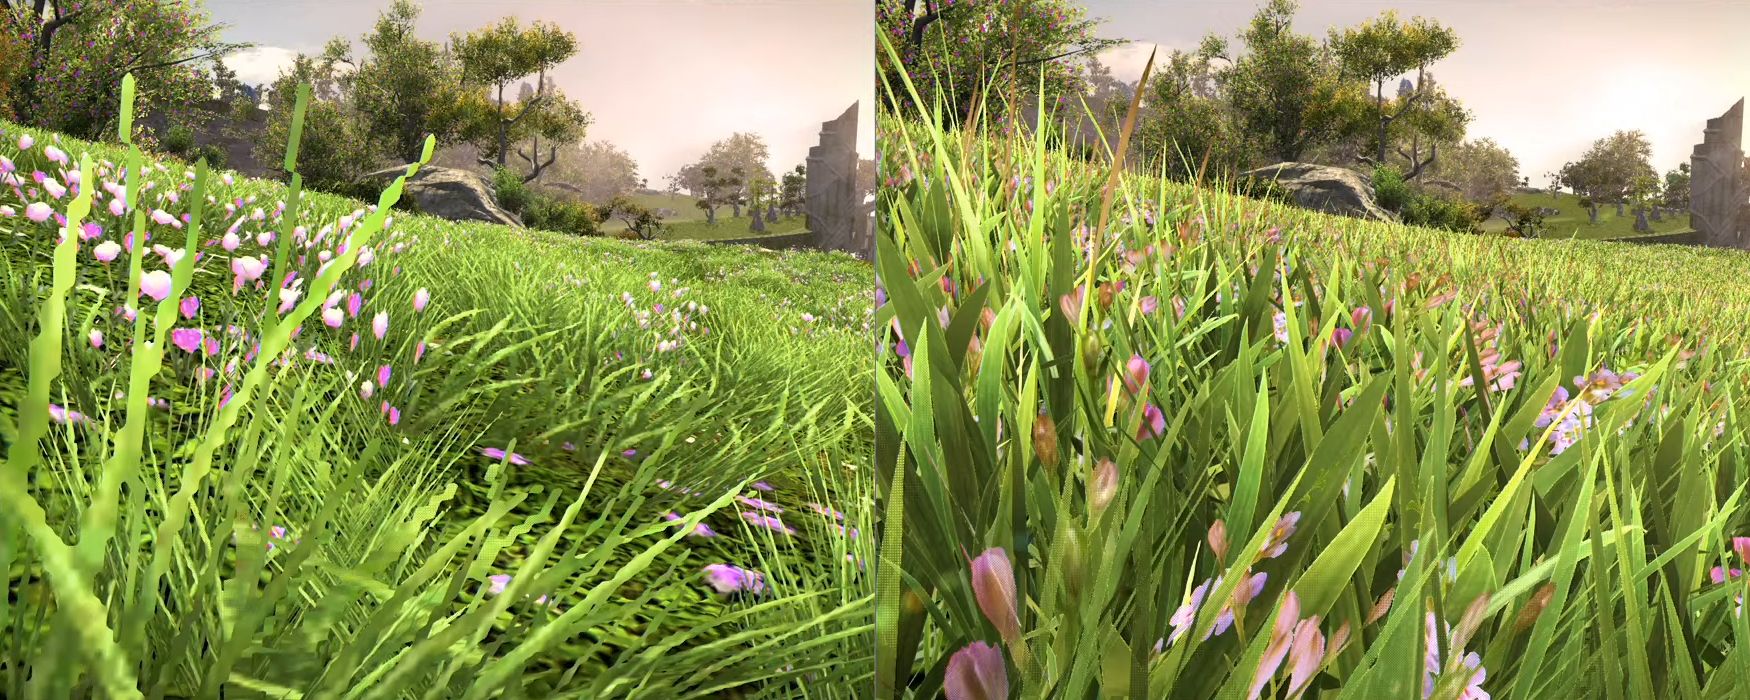 final fantasy 14 graphics overhaul grass